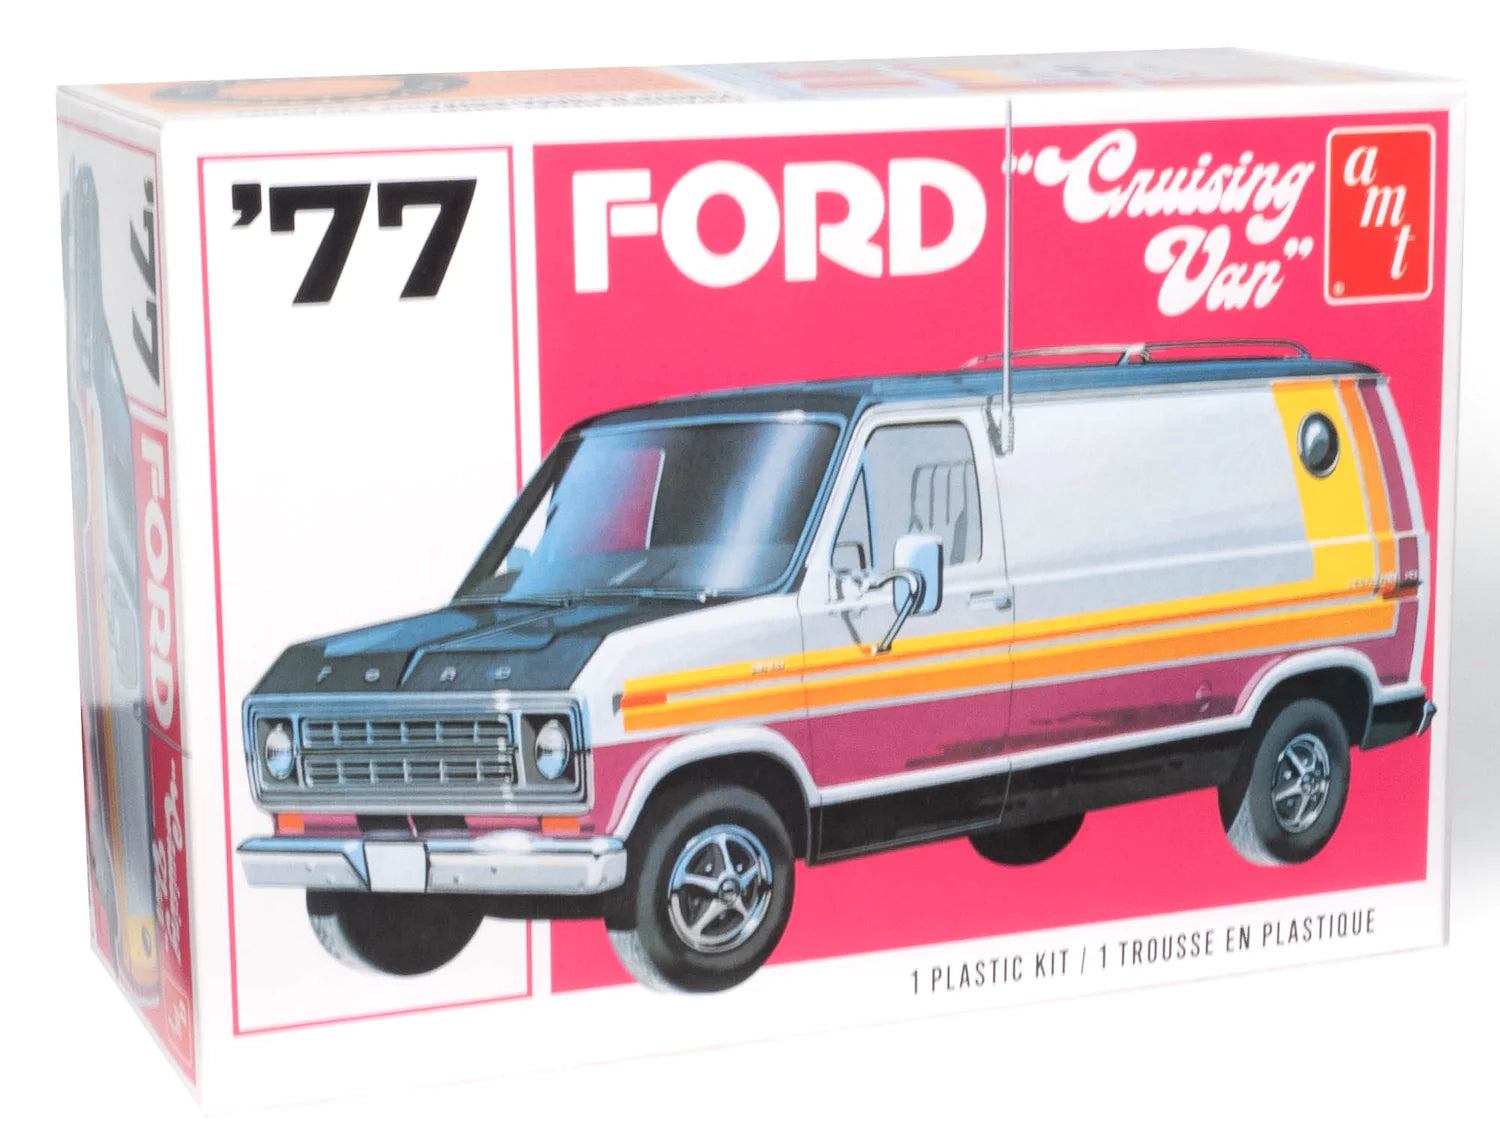 AMT1108M - 1:25 1977 Ford Cruising Van 2T